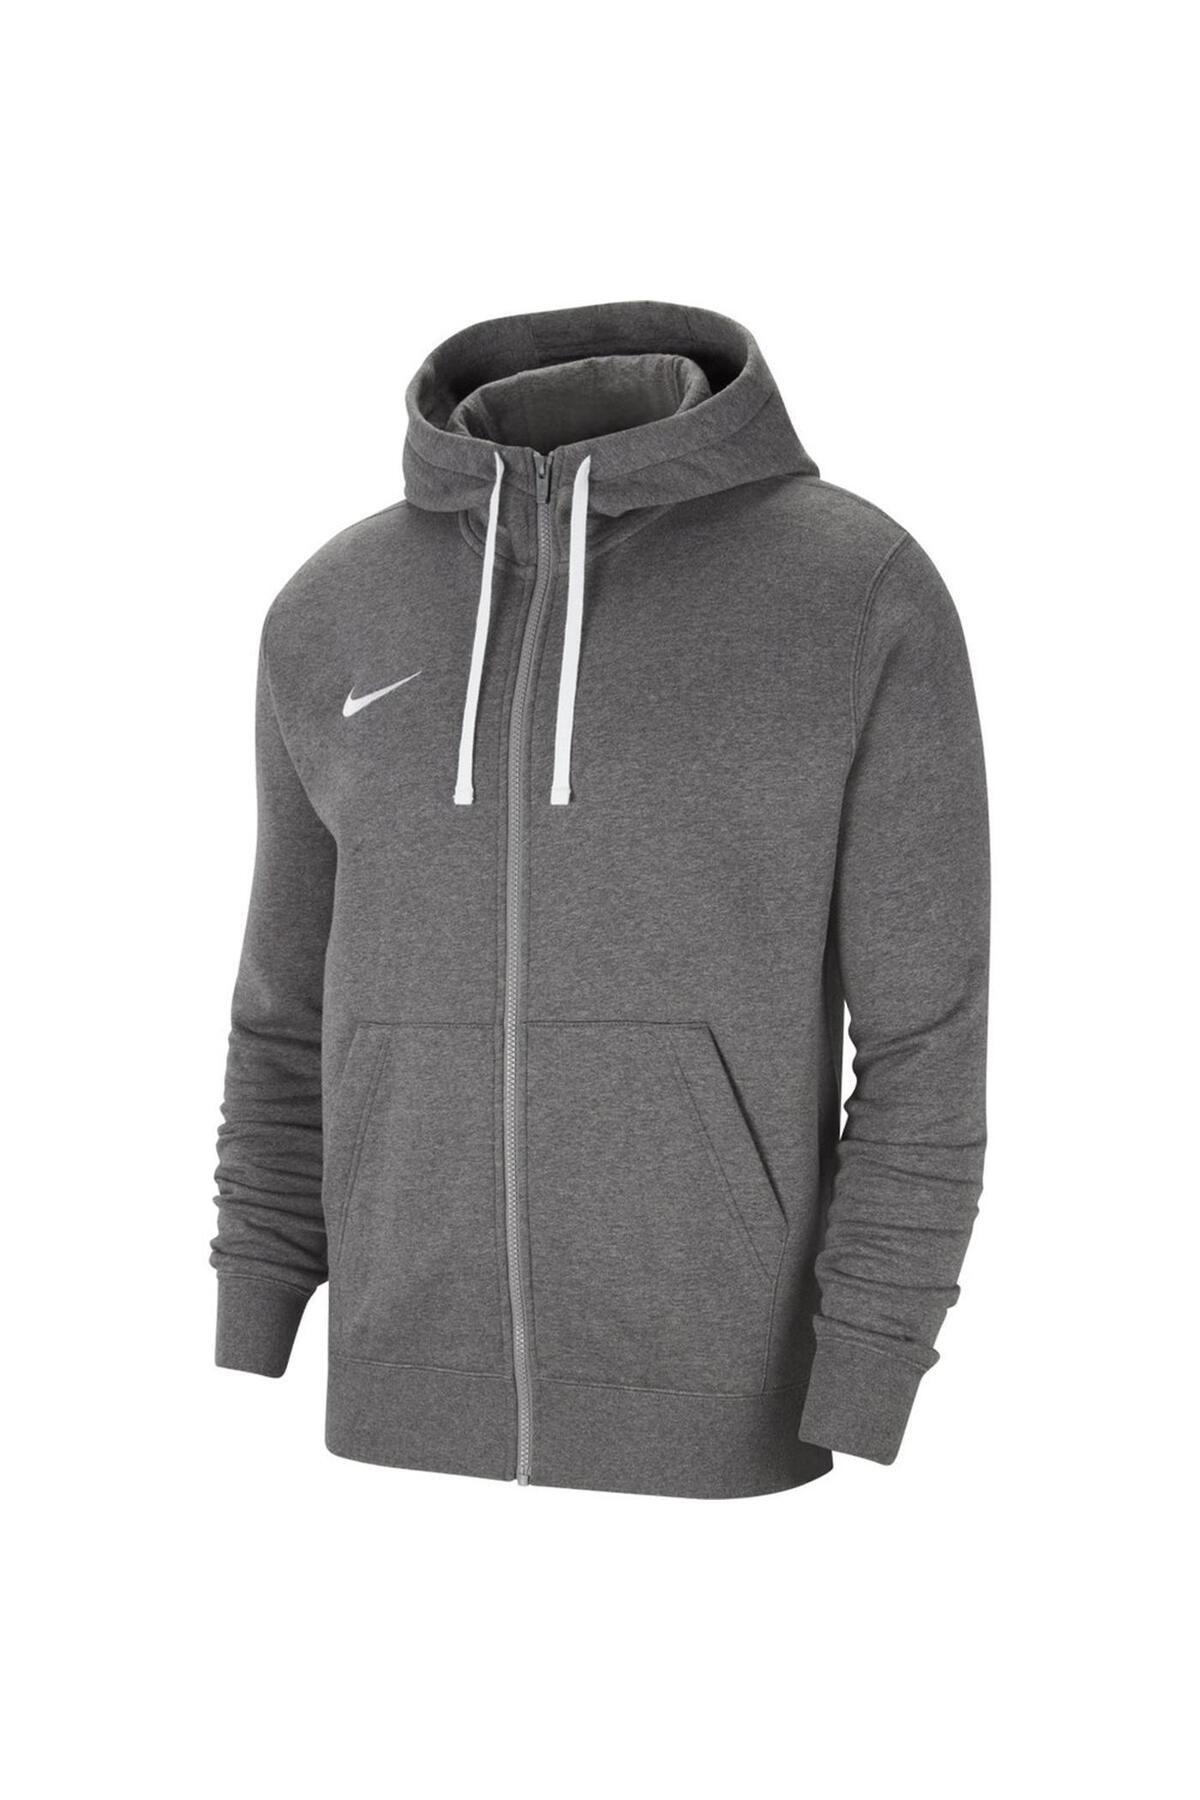 Nike Cw6891-071 Park 20 Full-zip Unisex Sweatshirt